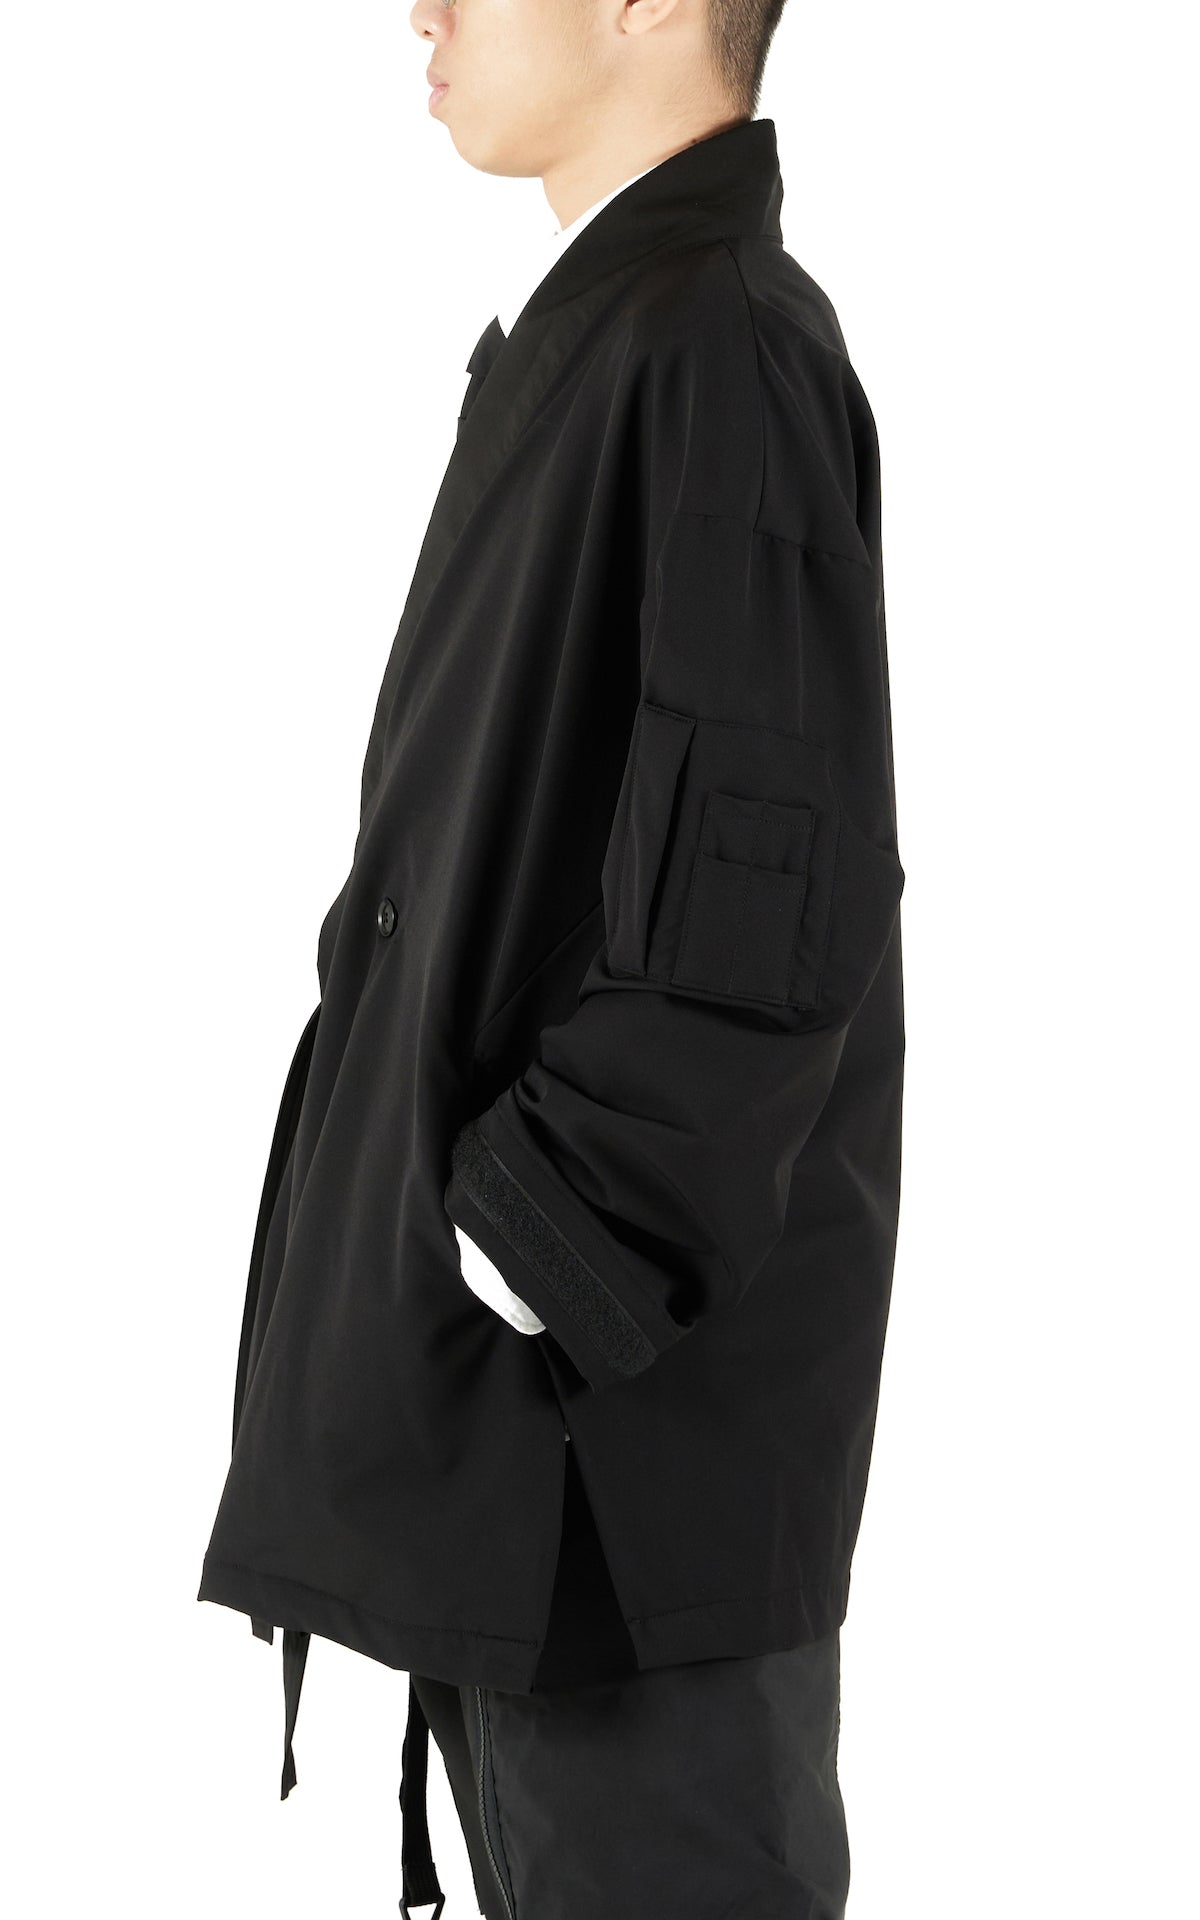 1. "MULTI" Nylon Waterproof 4 Way-Stretch Jacket